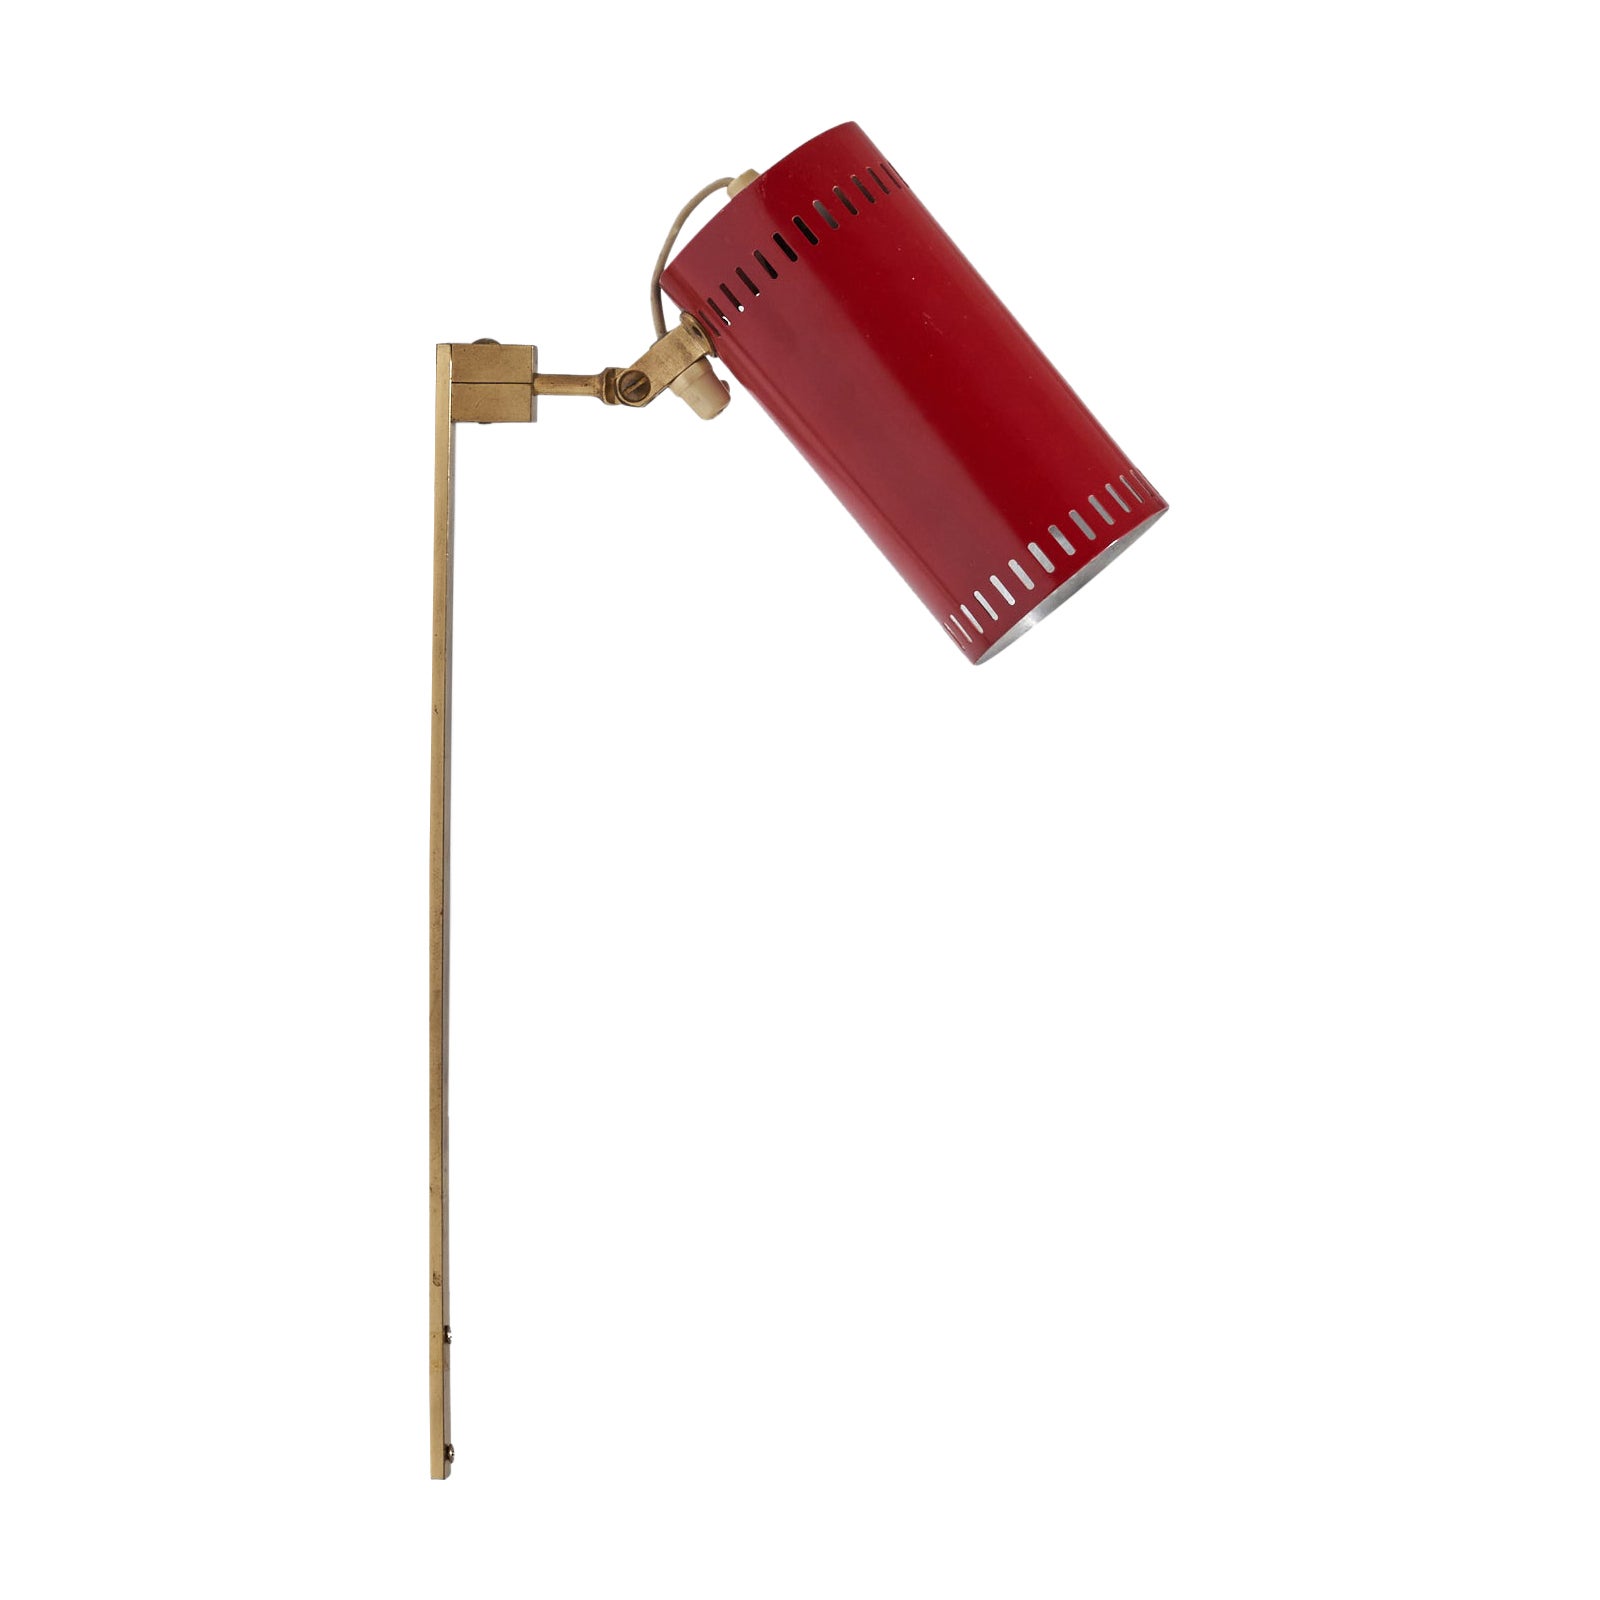 Öia, Adjustable Sconce, Brass, Red Lacquered Metal, Sweden, 1960s